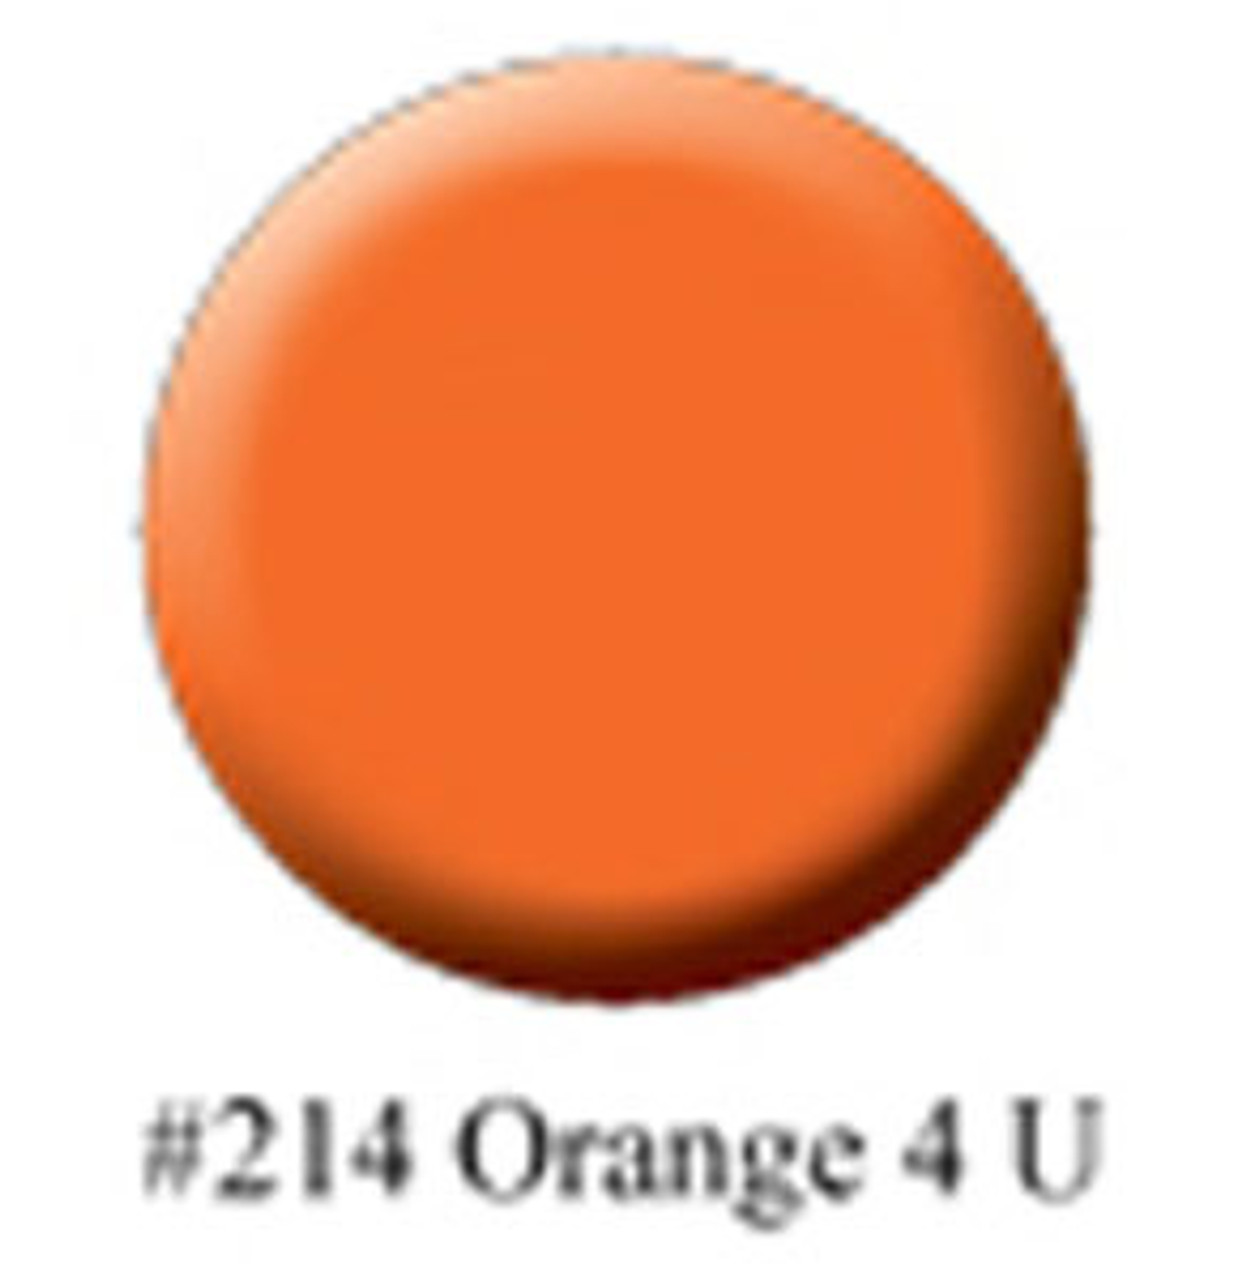 BASIC ONE - Gelacquer Orange 4 U - 1/4oz